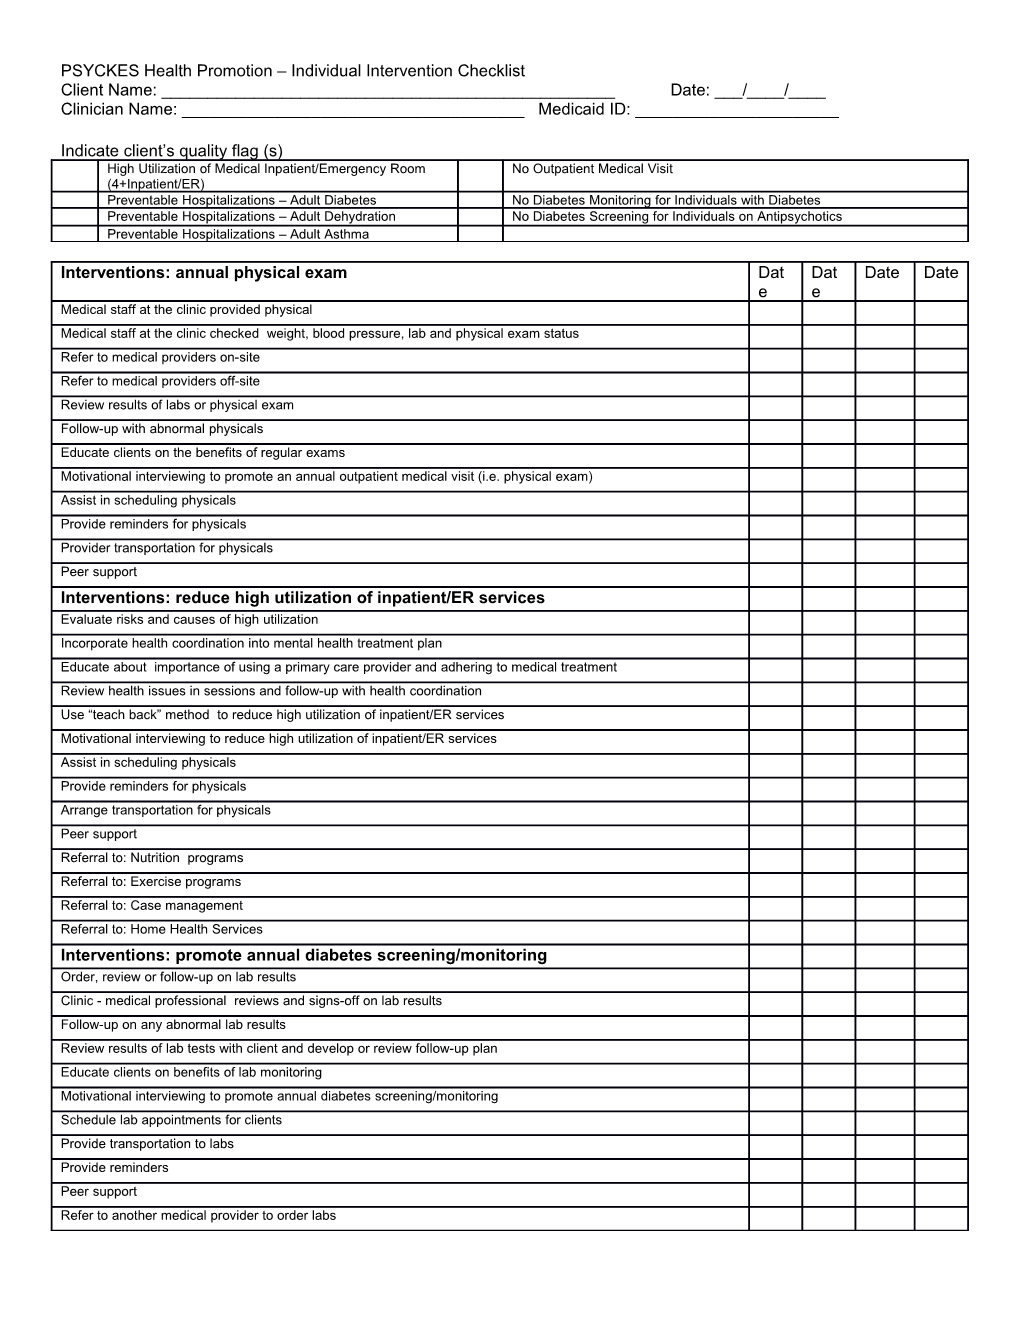 PSYCKES Health Promotion Individual Intervention Checklist